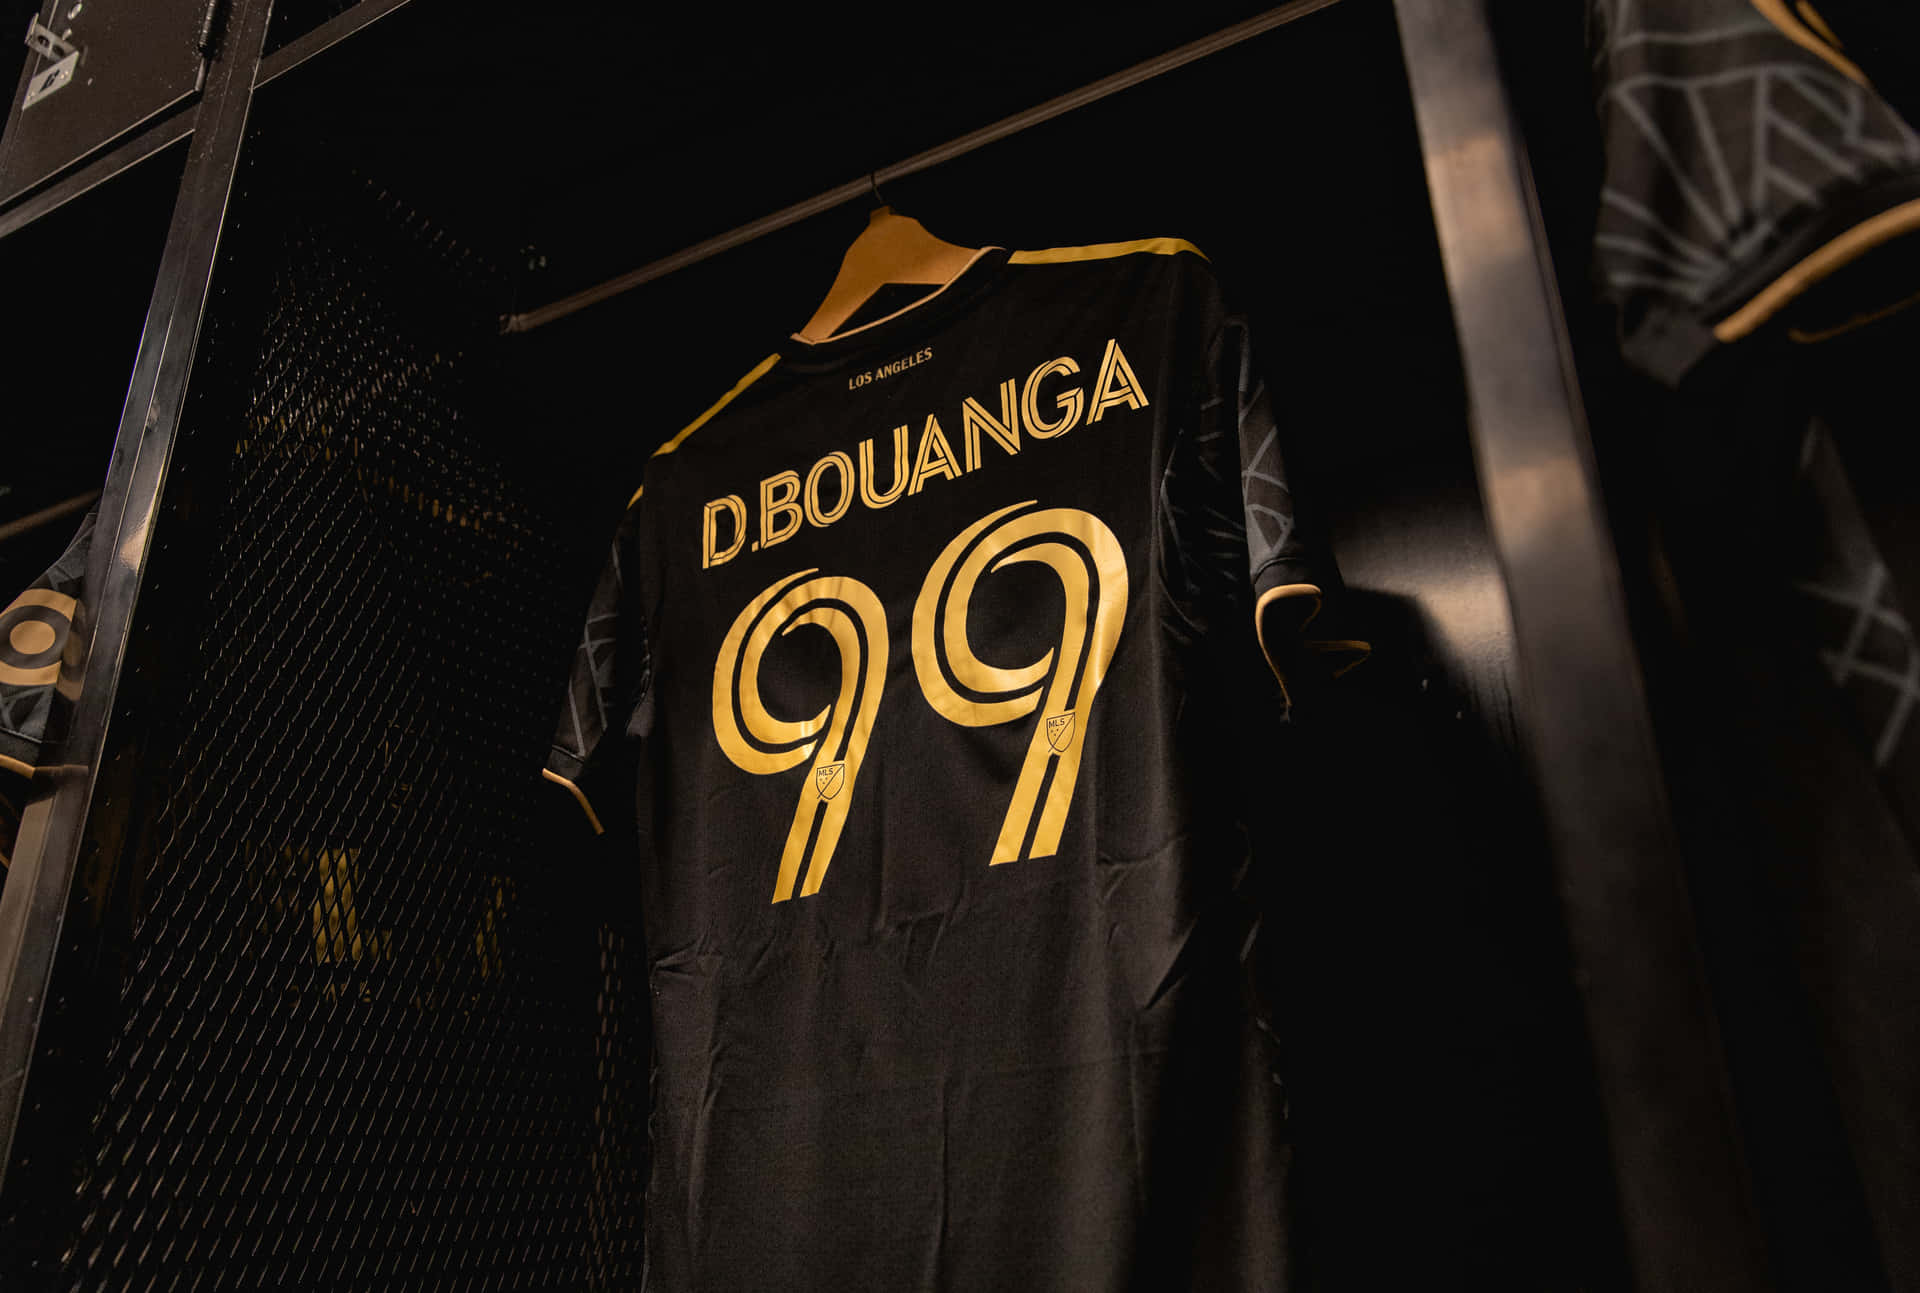 Denisbouanga Camiseta Negra Y Dorada Con El Número 99 Fondo de pantalla